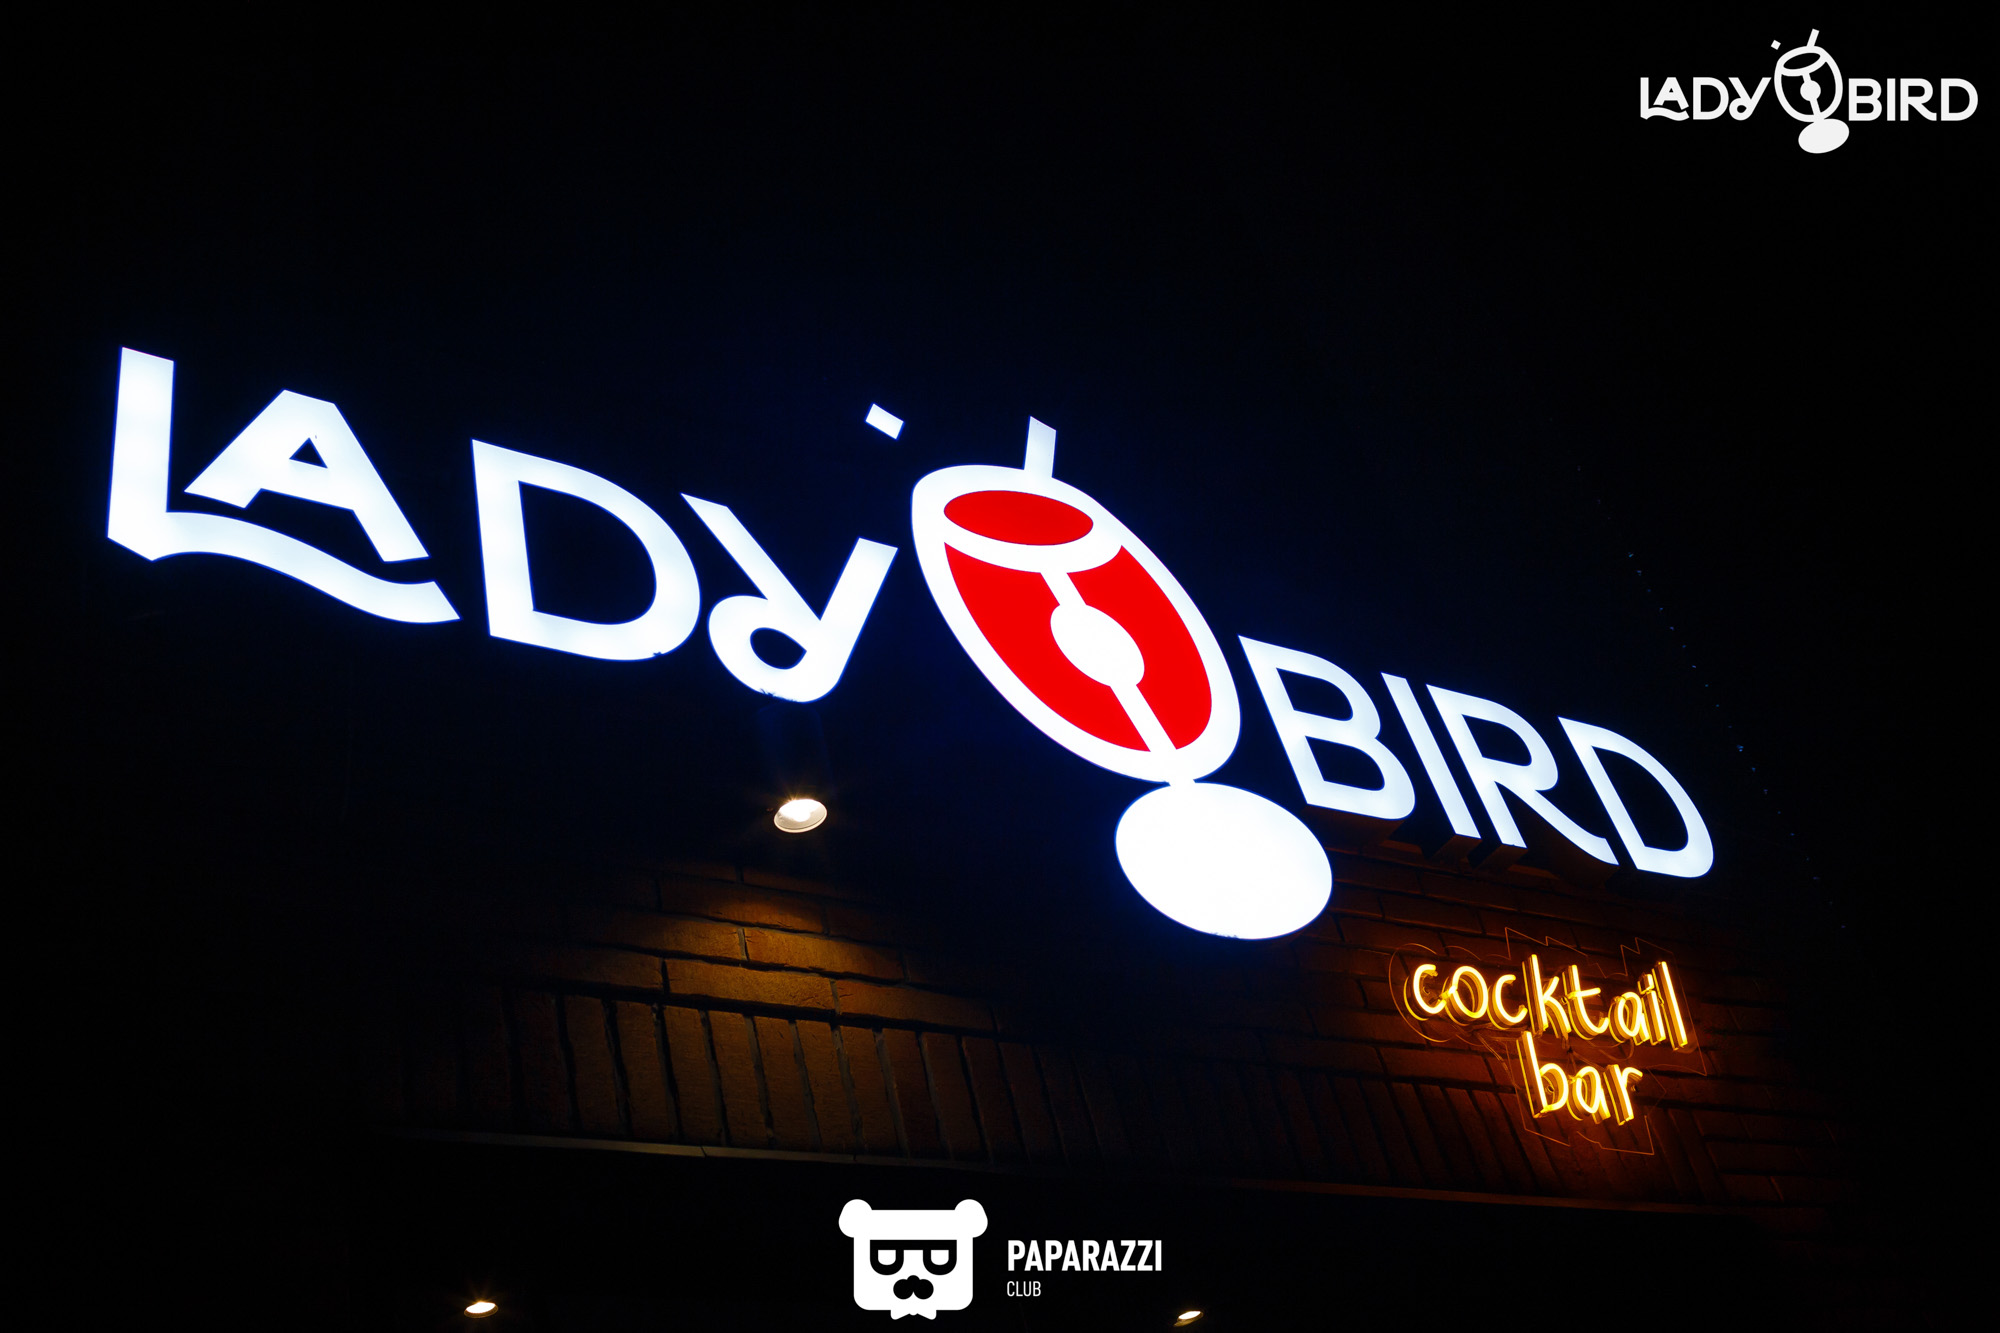 "LADY BIRD"